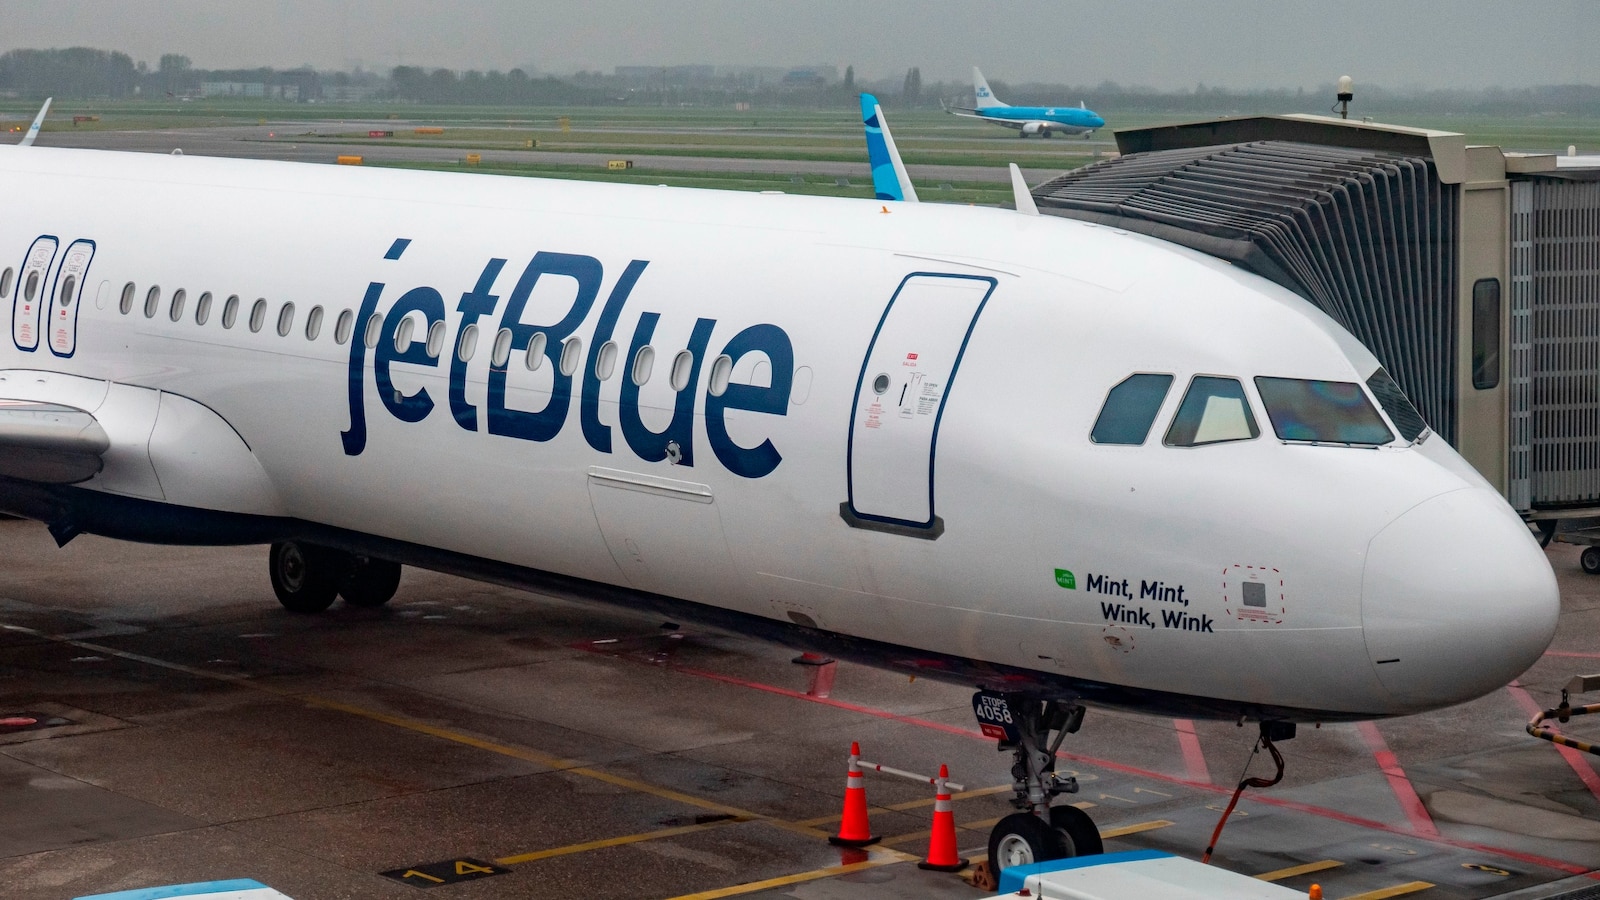 Passenger sues JetBlue alleging severe burns due to hot tea served amid turbulence